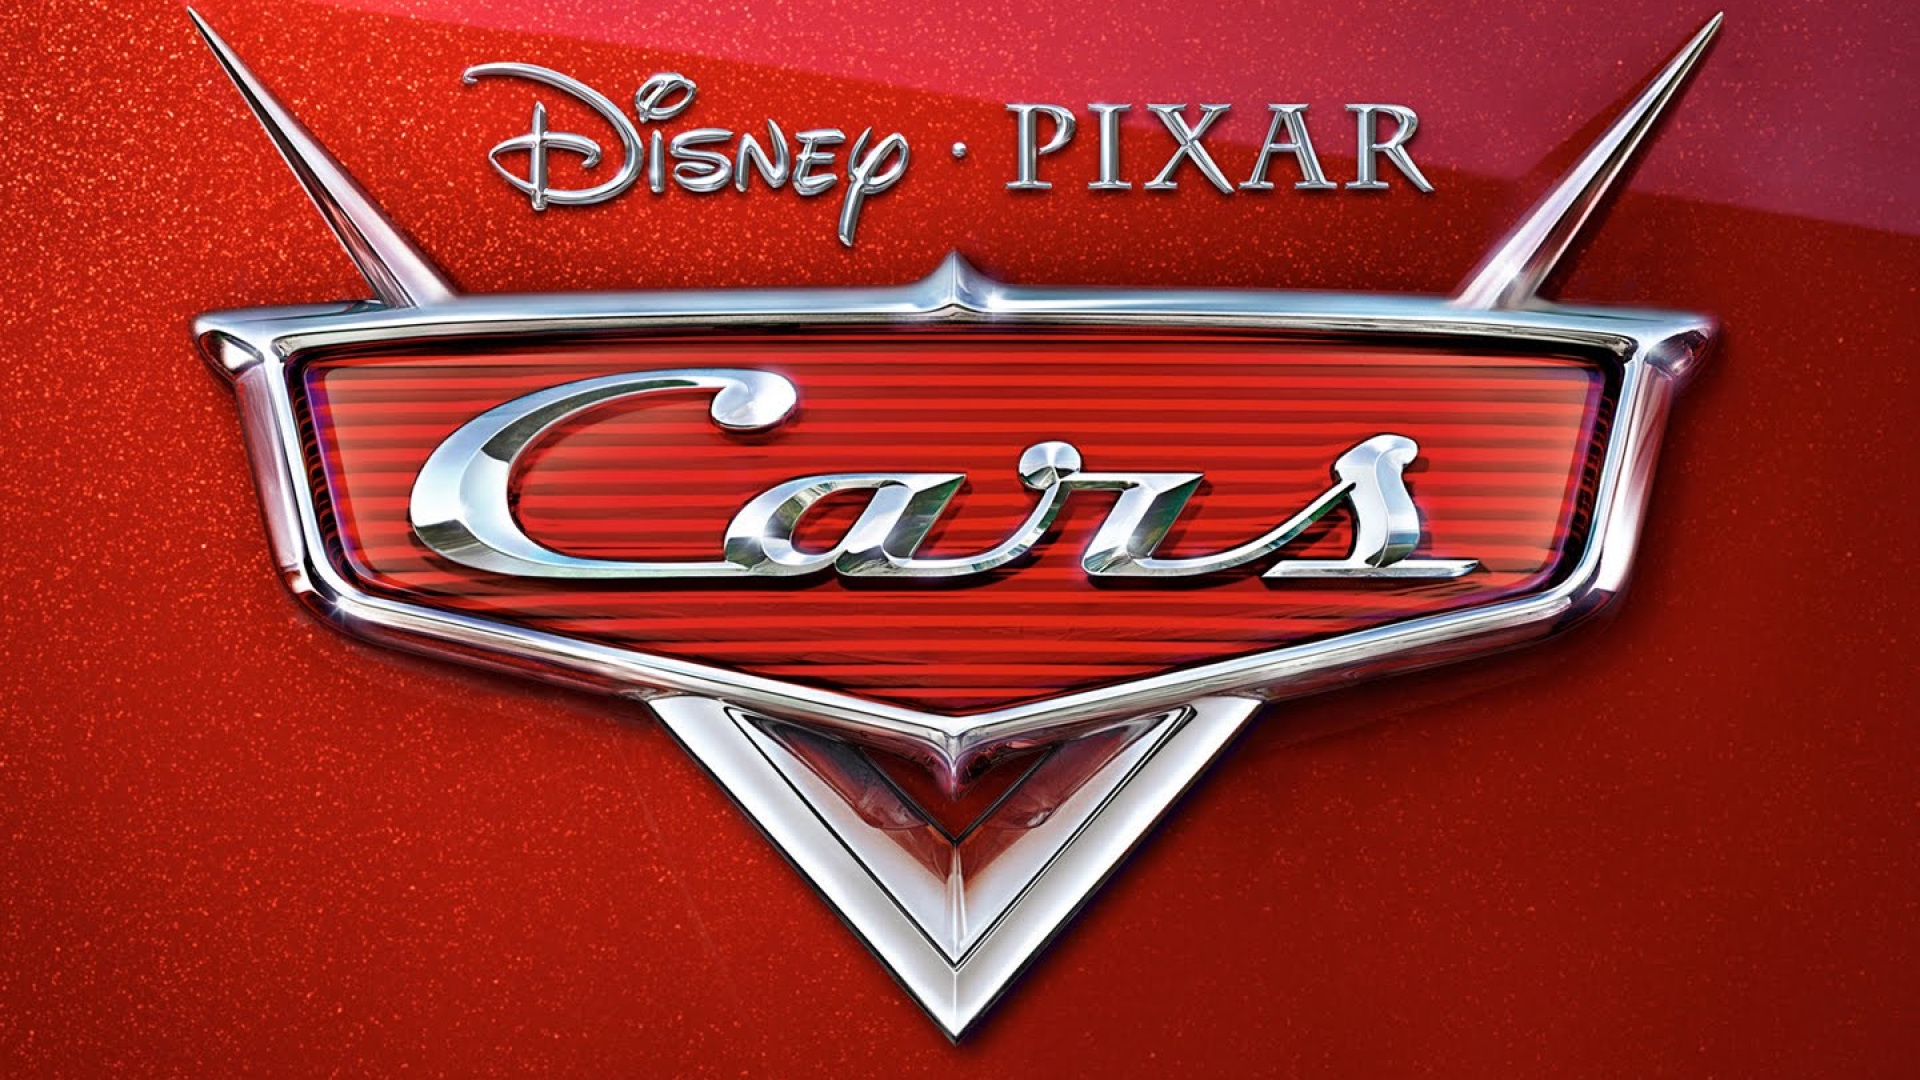 Disney Pixar Cars Wallpaper wallpaper   964327 1920x1080